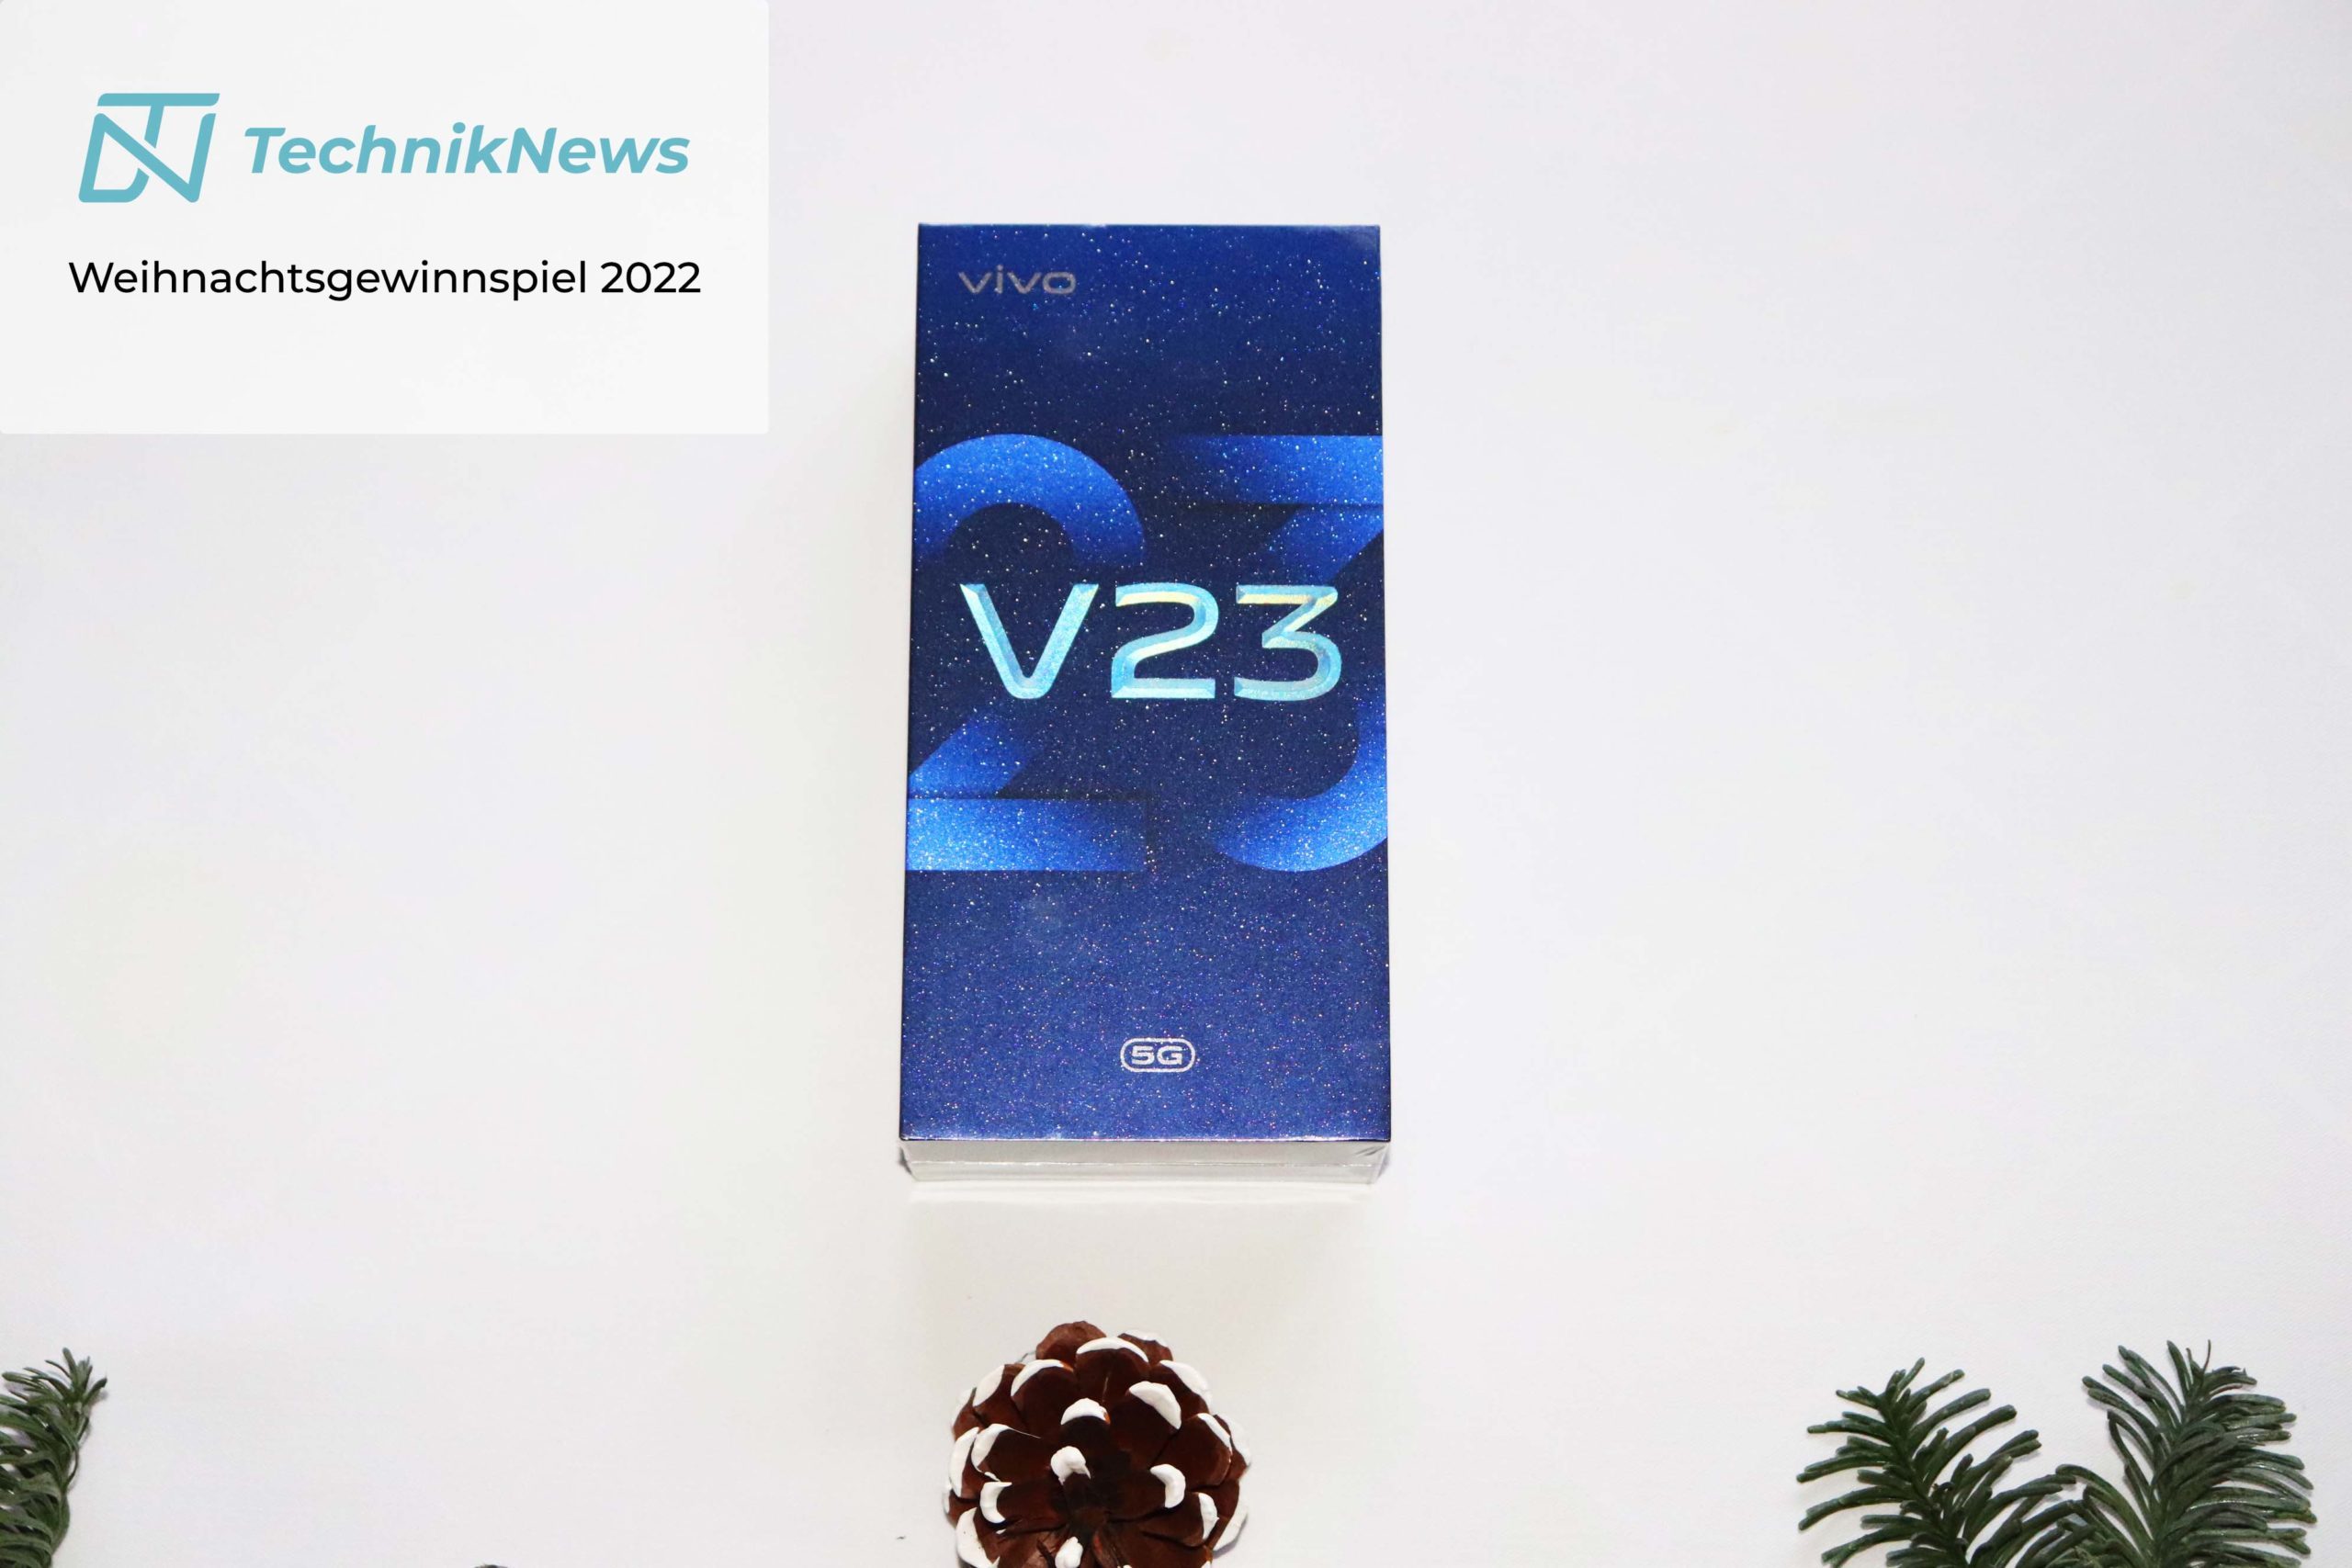 TechnikNews Christmas competition 2022 vivo V23